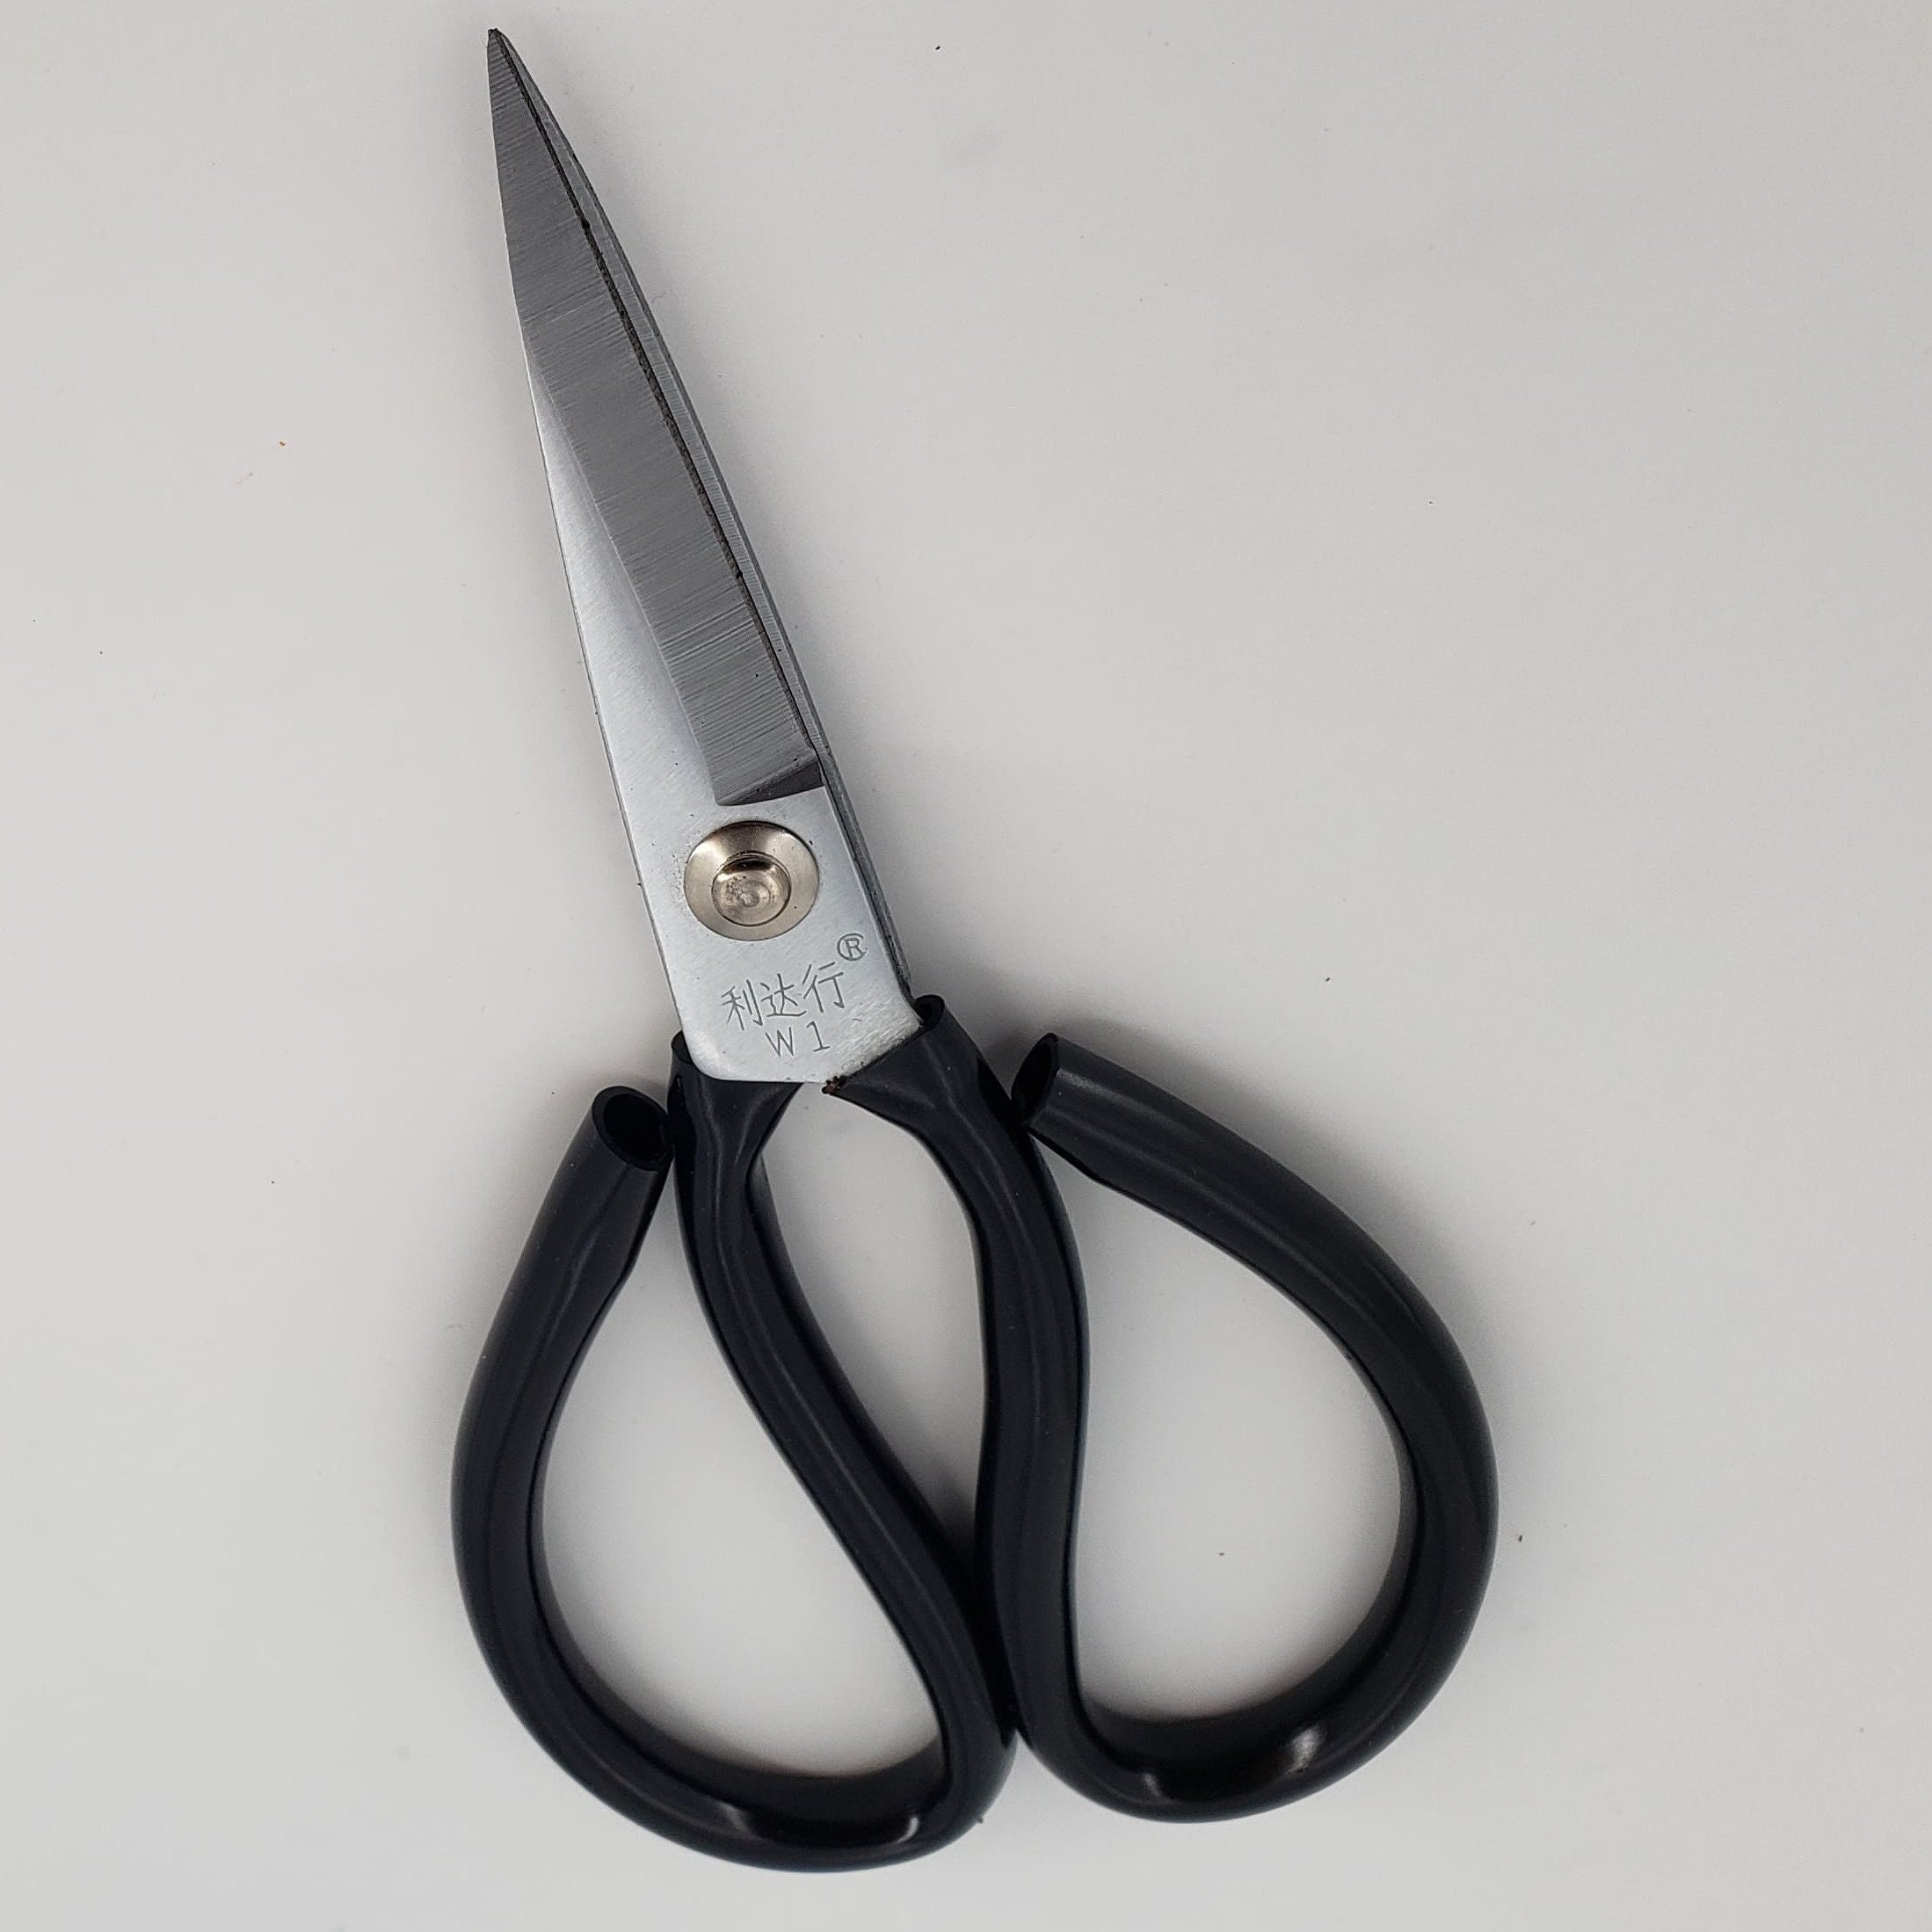 Scissors, 8 inch Multipurpose Sharp Scissors for Office Home High/Middle School Student Teacher Scissor Supplies, Soft Comfort-Grip Right/Left Handles